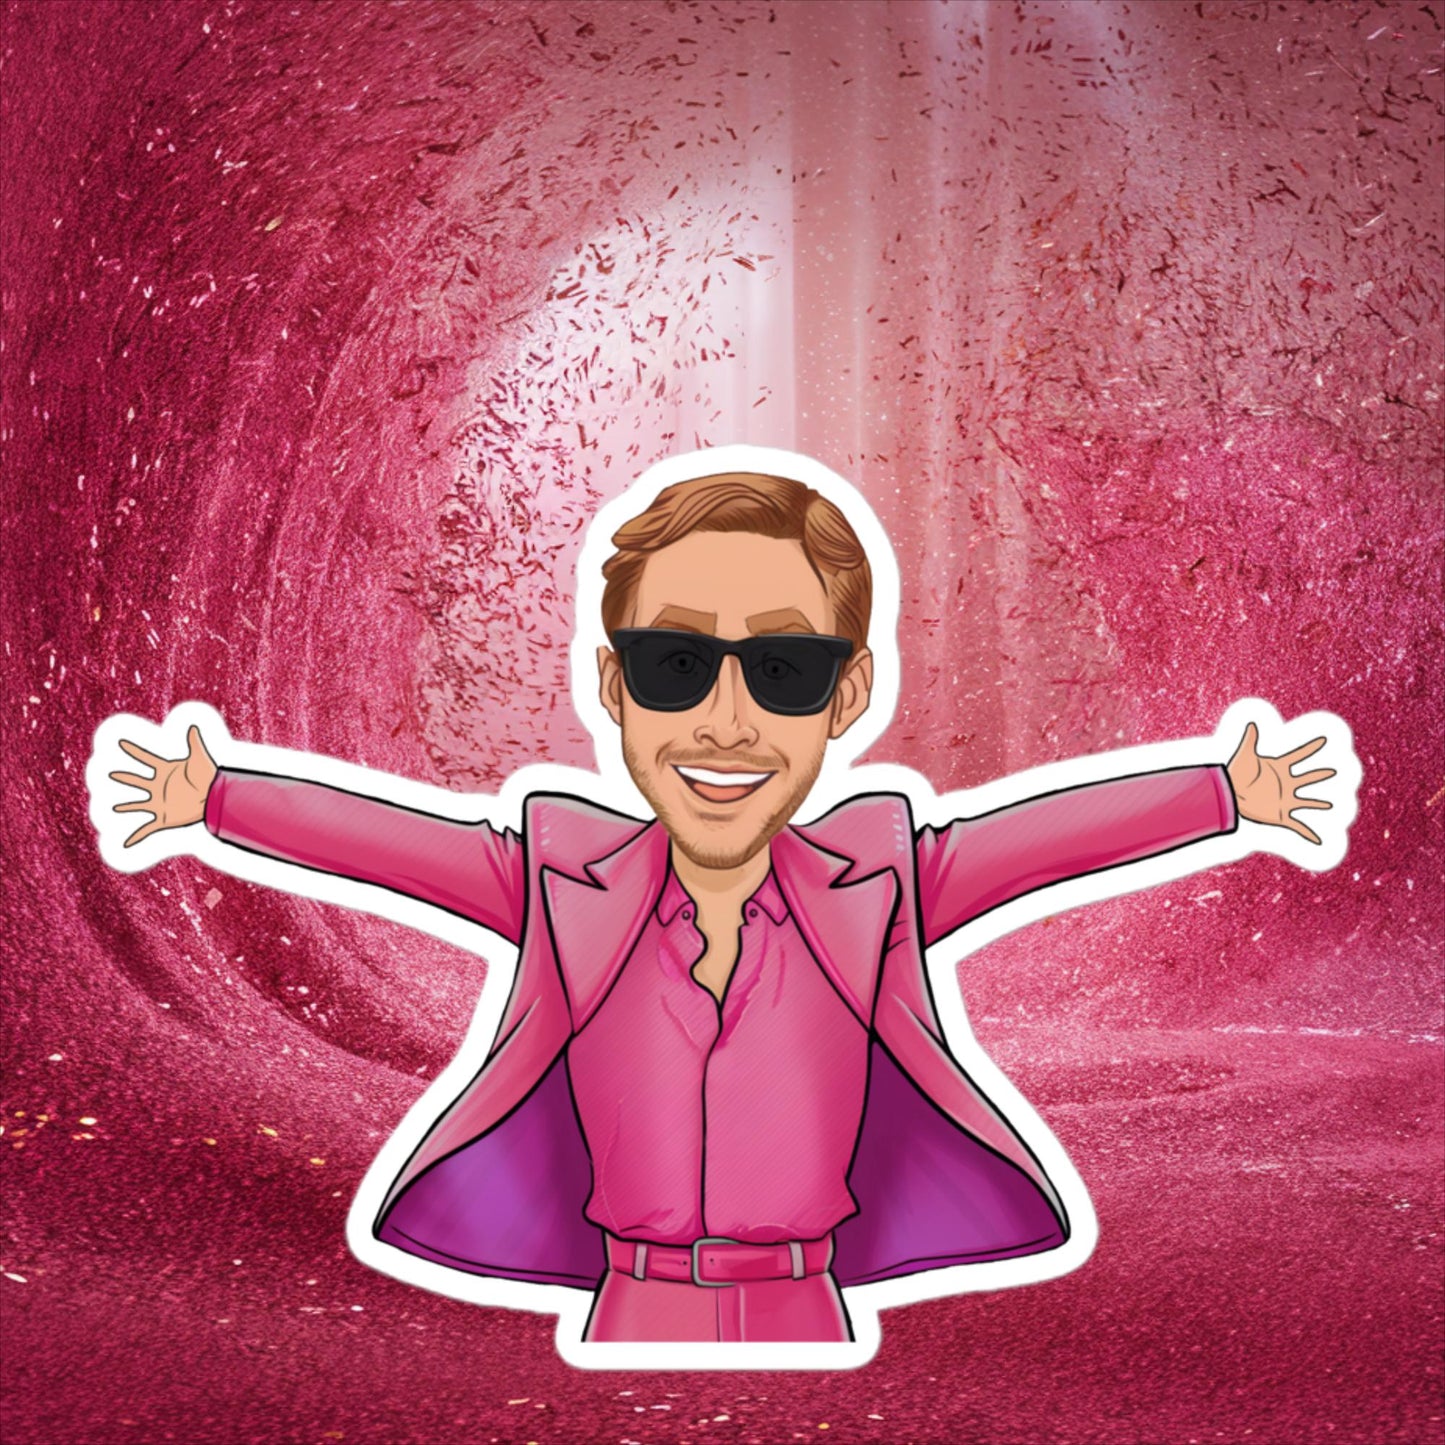 Ken Barbie Ryan Gosling I'm Just Ken Bubble-free stickers Next Cult Brand